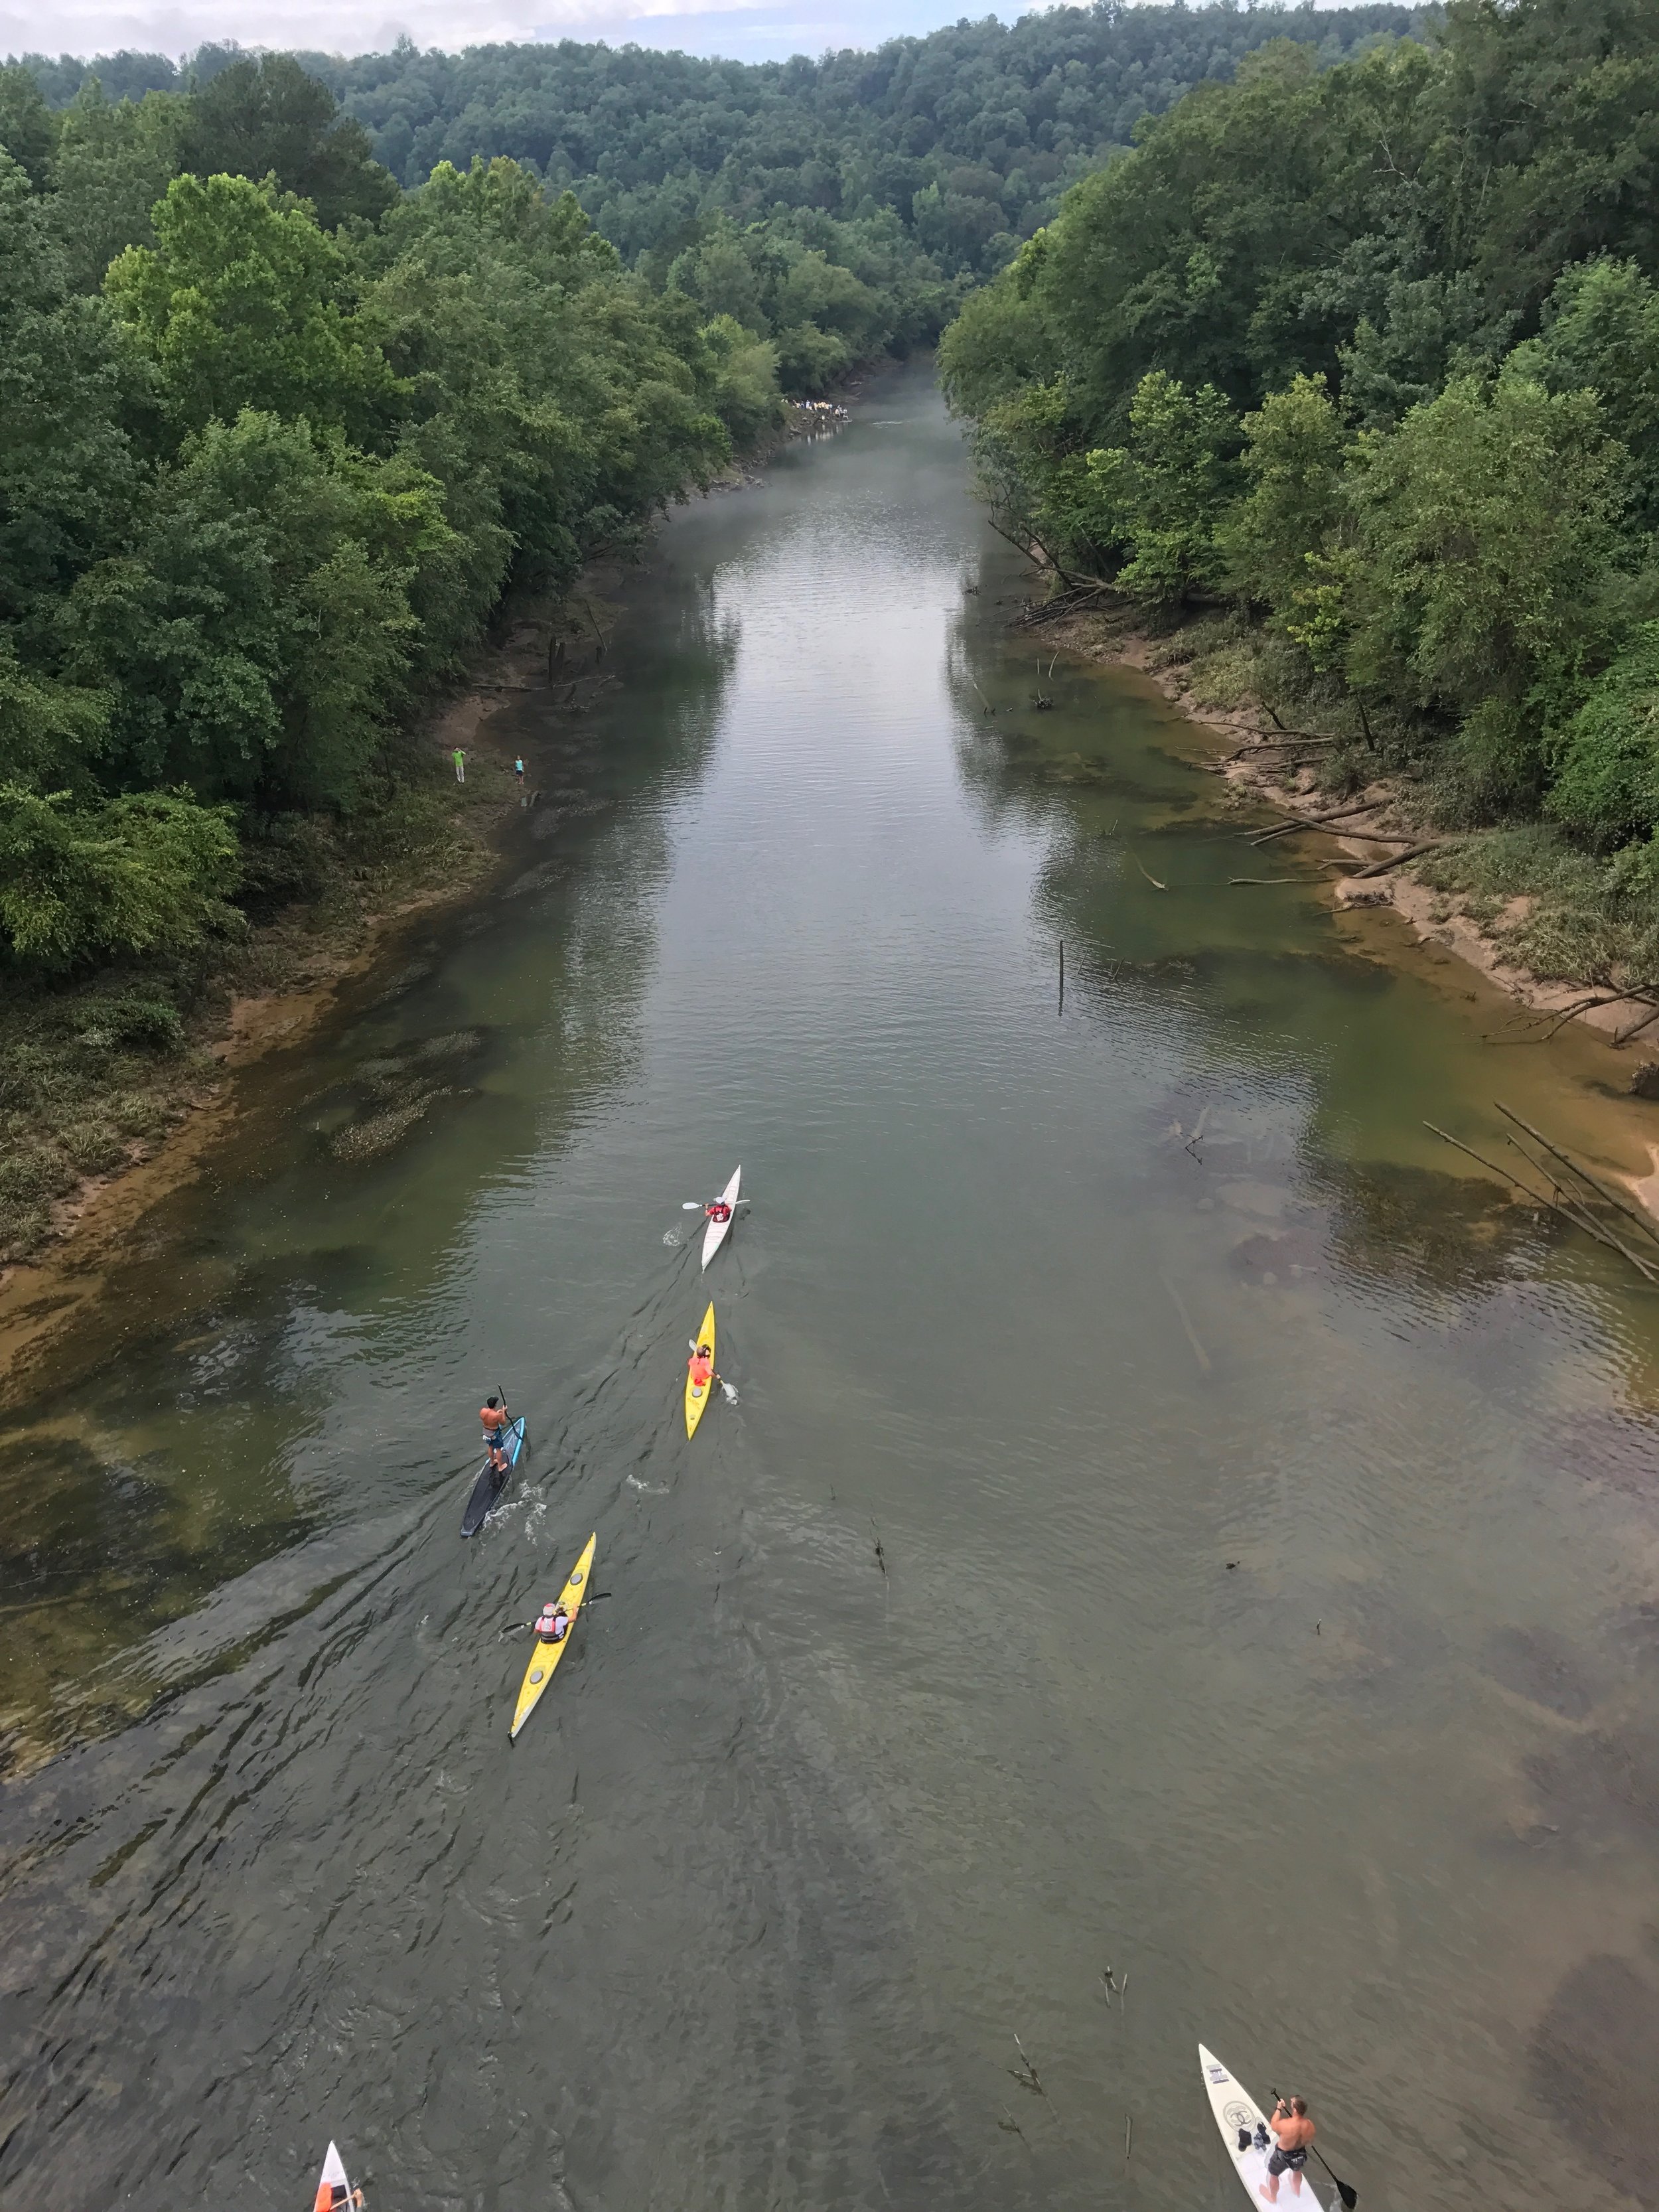 The Great Escape: River Run from Crockett